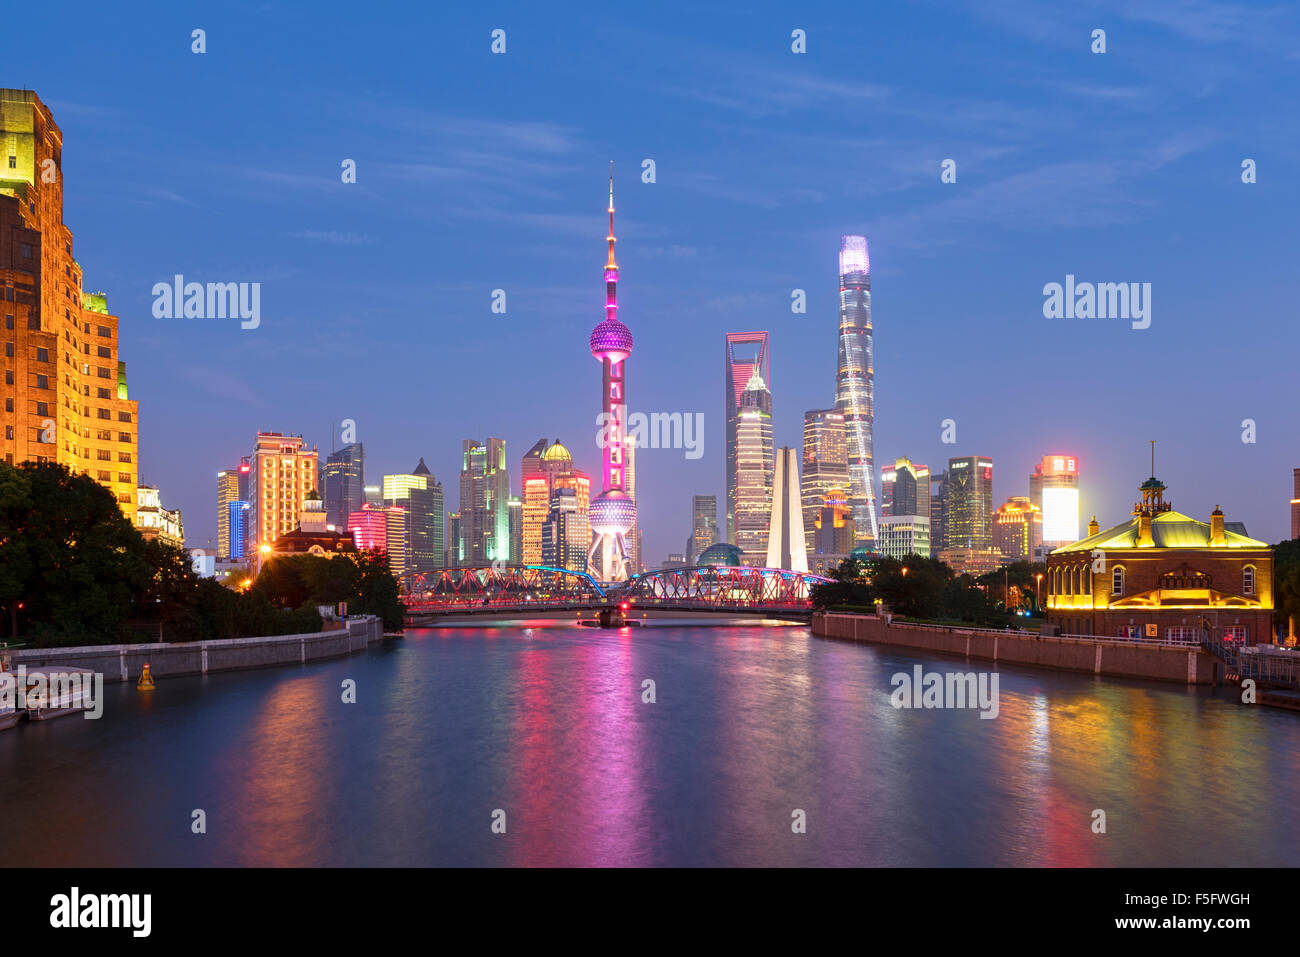 Shanghai, China - Oct 2, 2015:Shanghai skyline with Oriental Pearl Tower, Shanghai World Financial Centre,Jin Mao Tower and Sha Stock Photo